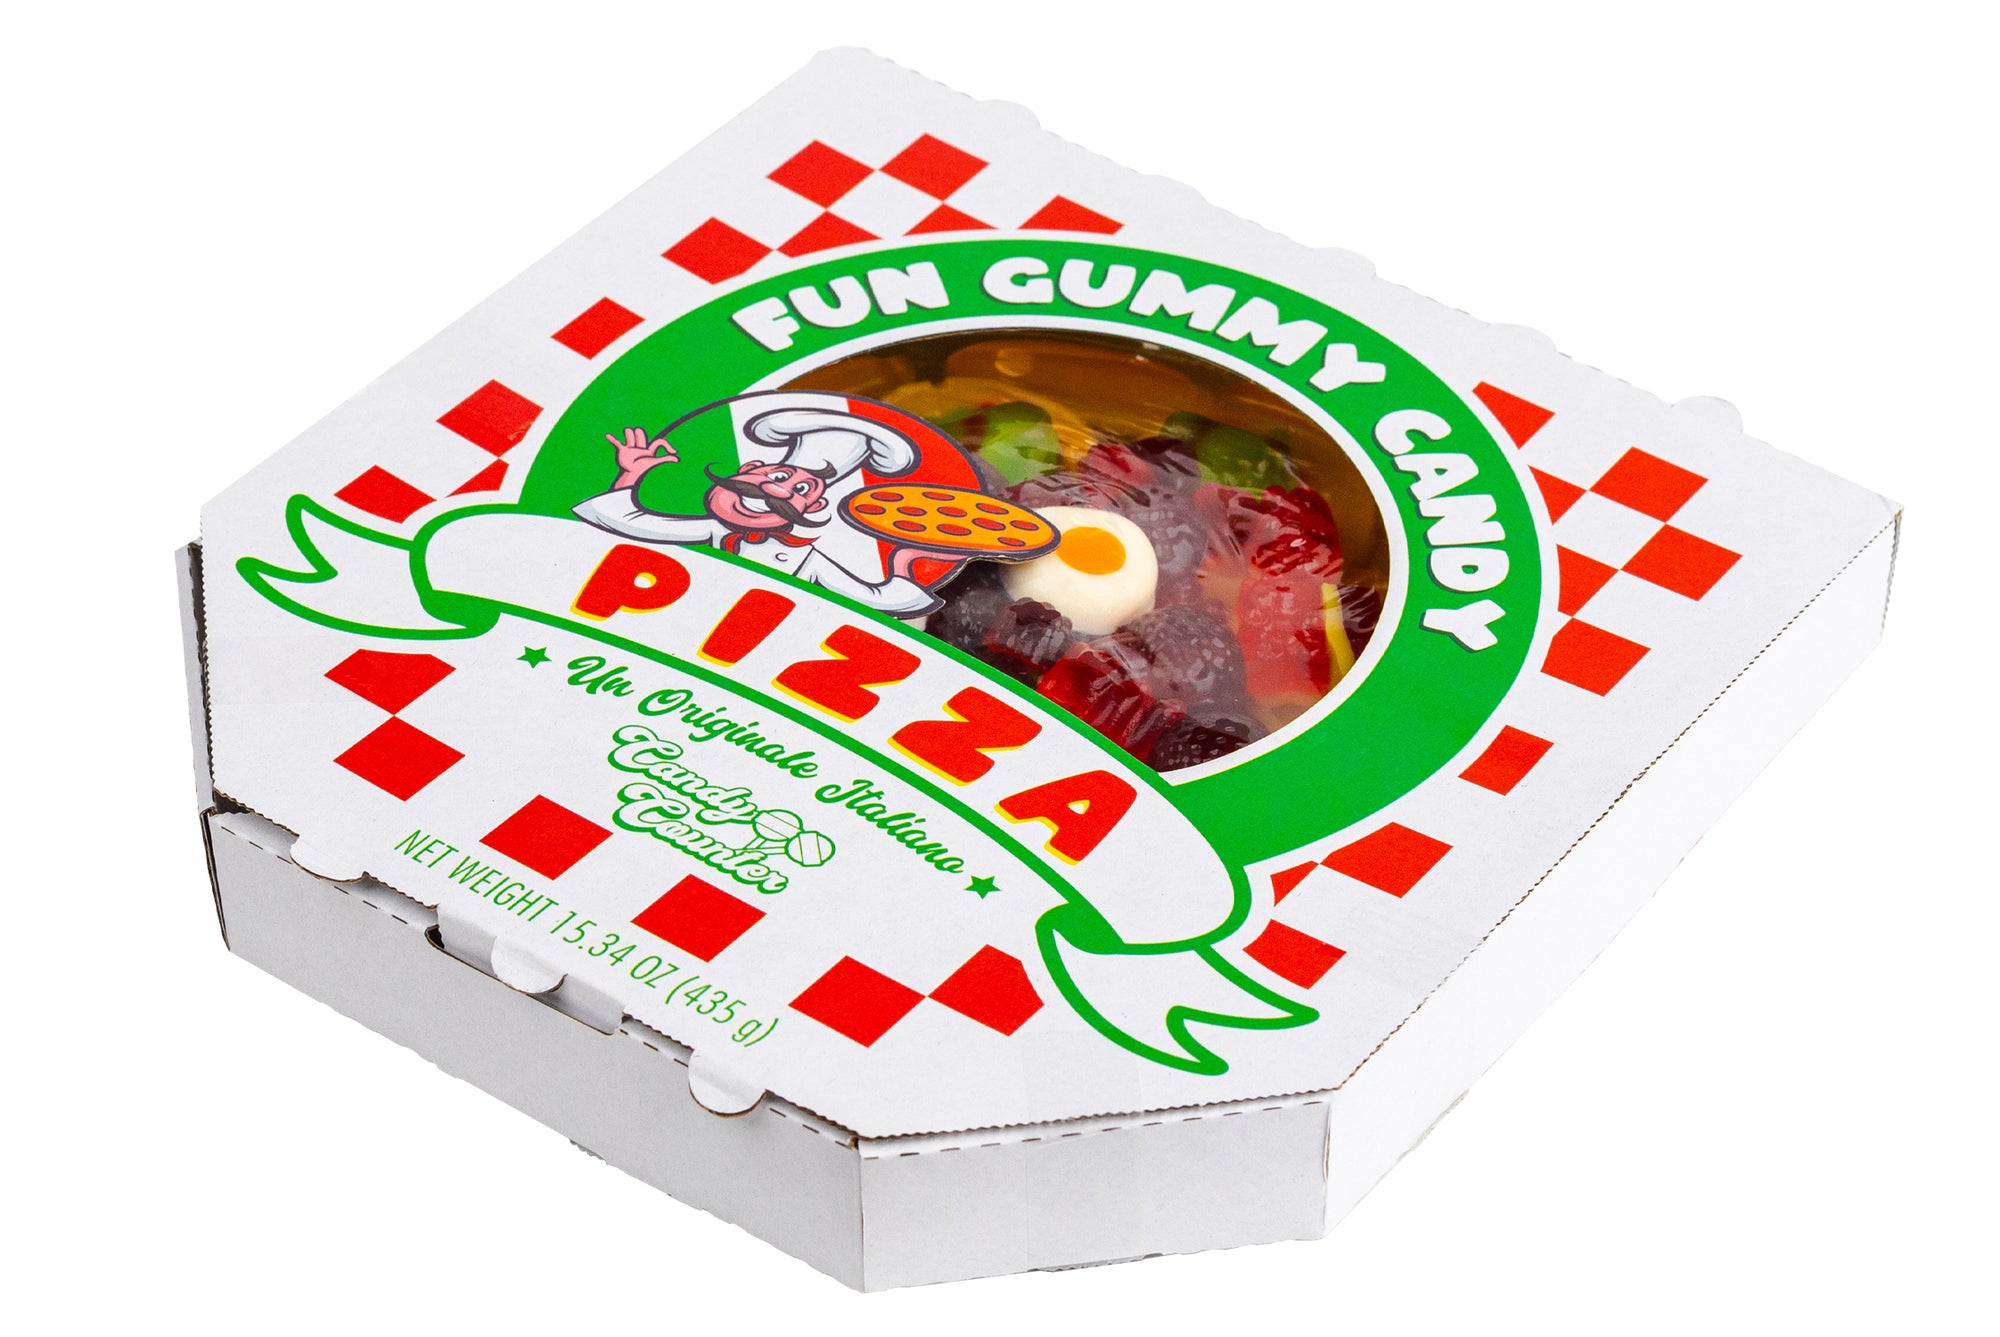 Giant Gummy Pizza Large - 15oz